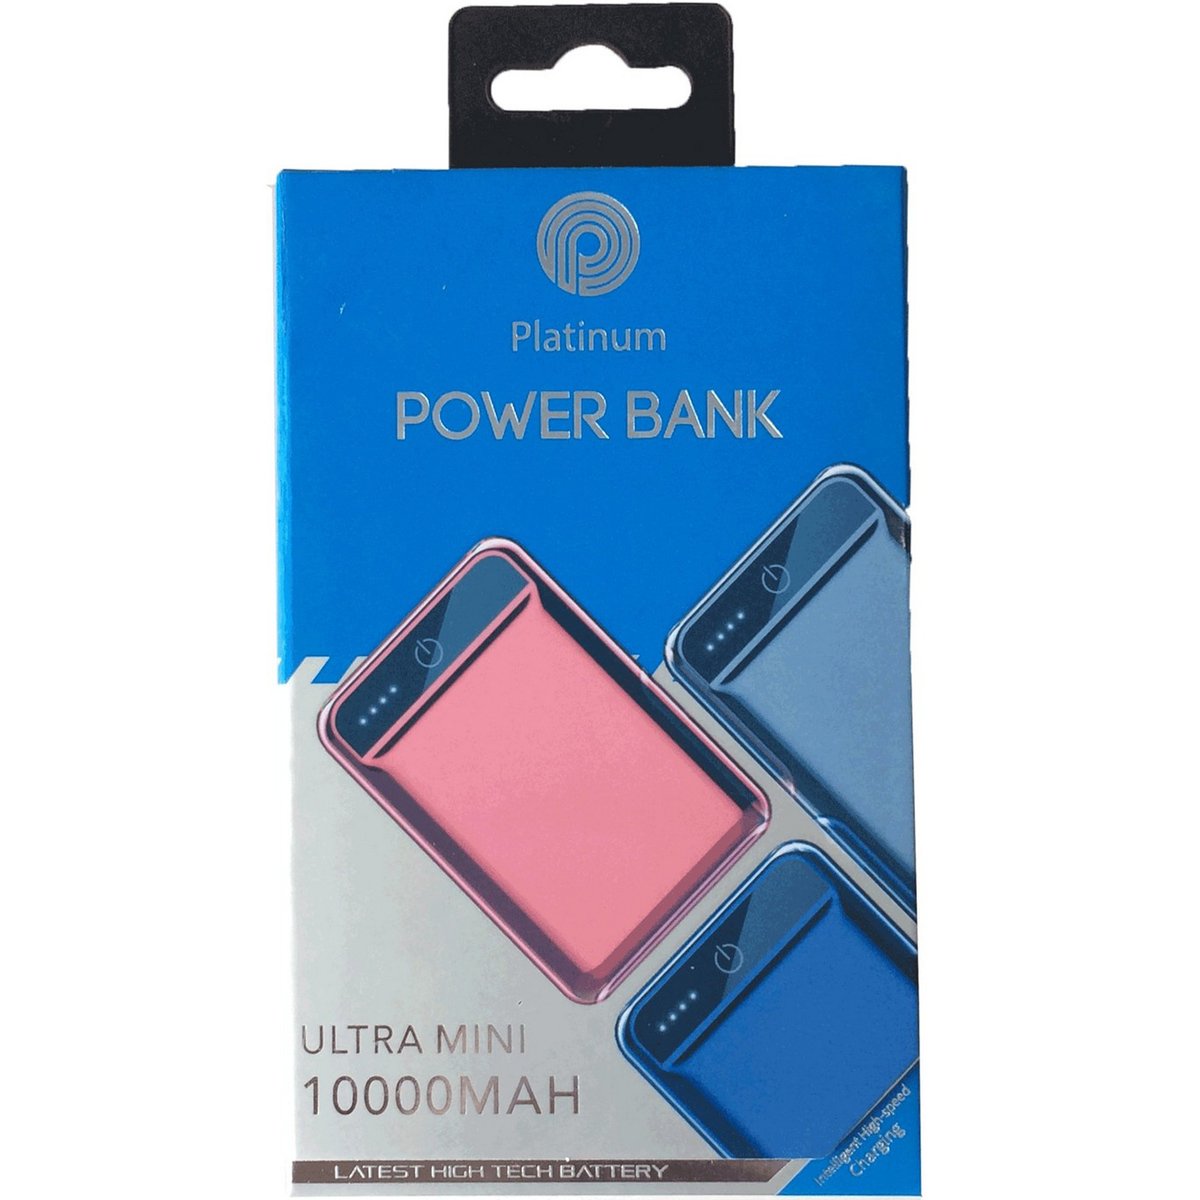 Platinum Mini Power Bank 10000mAh PP900 Assorted Color